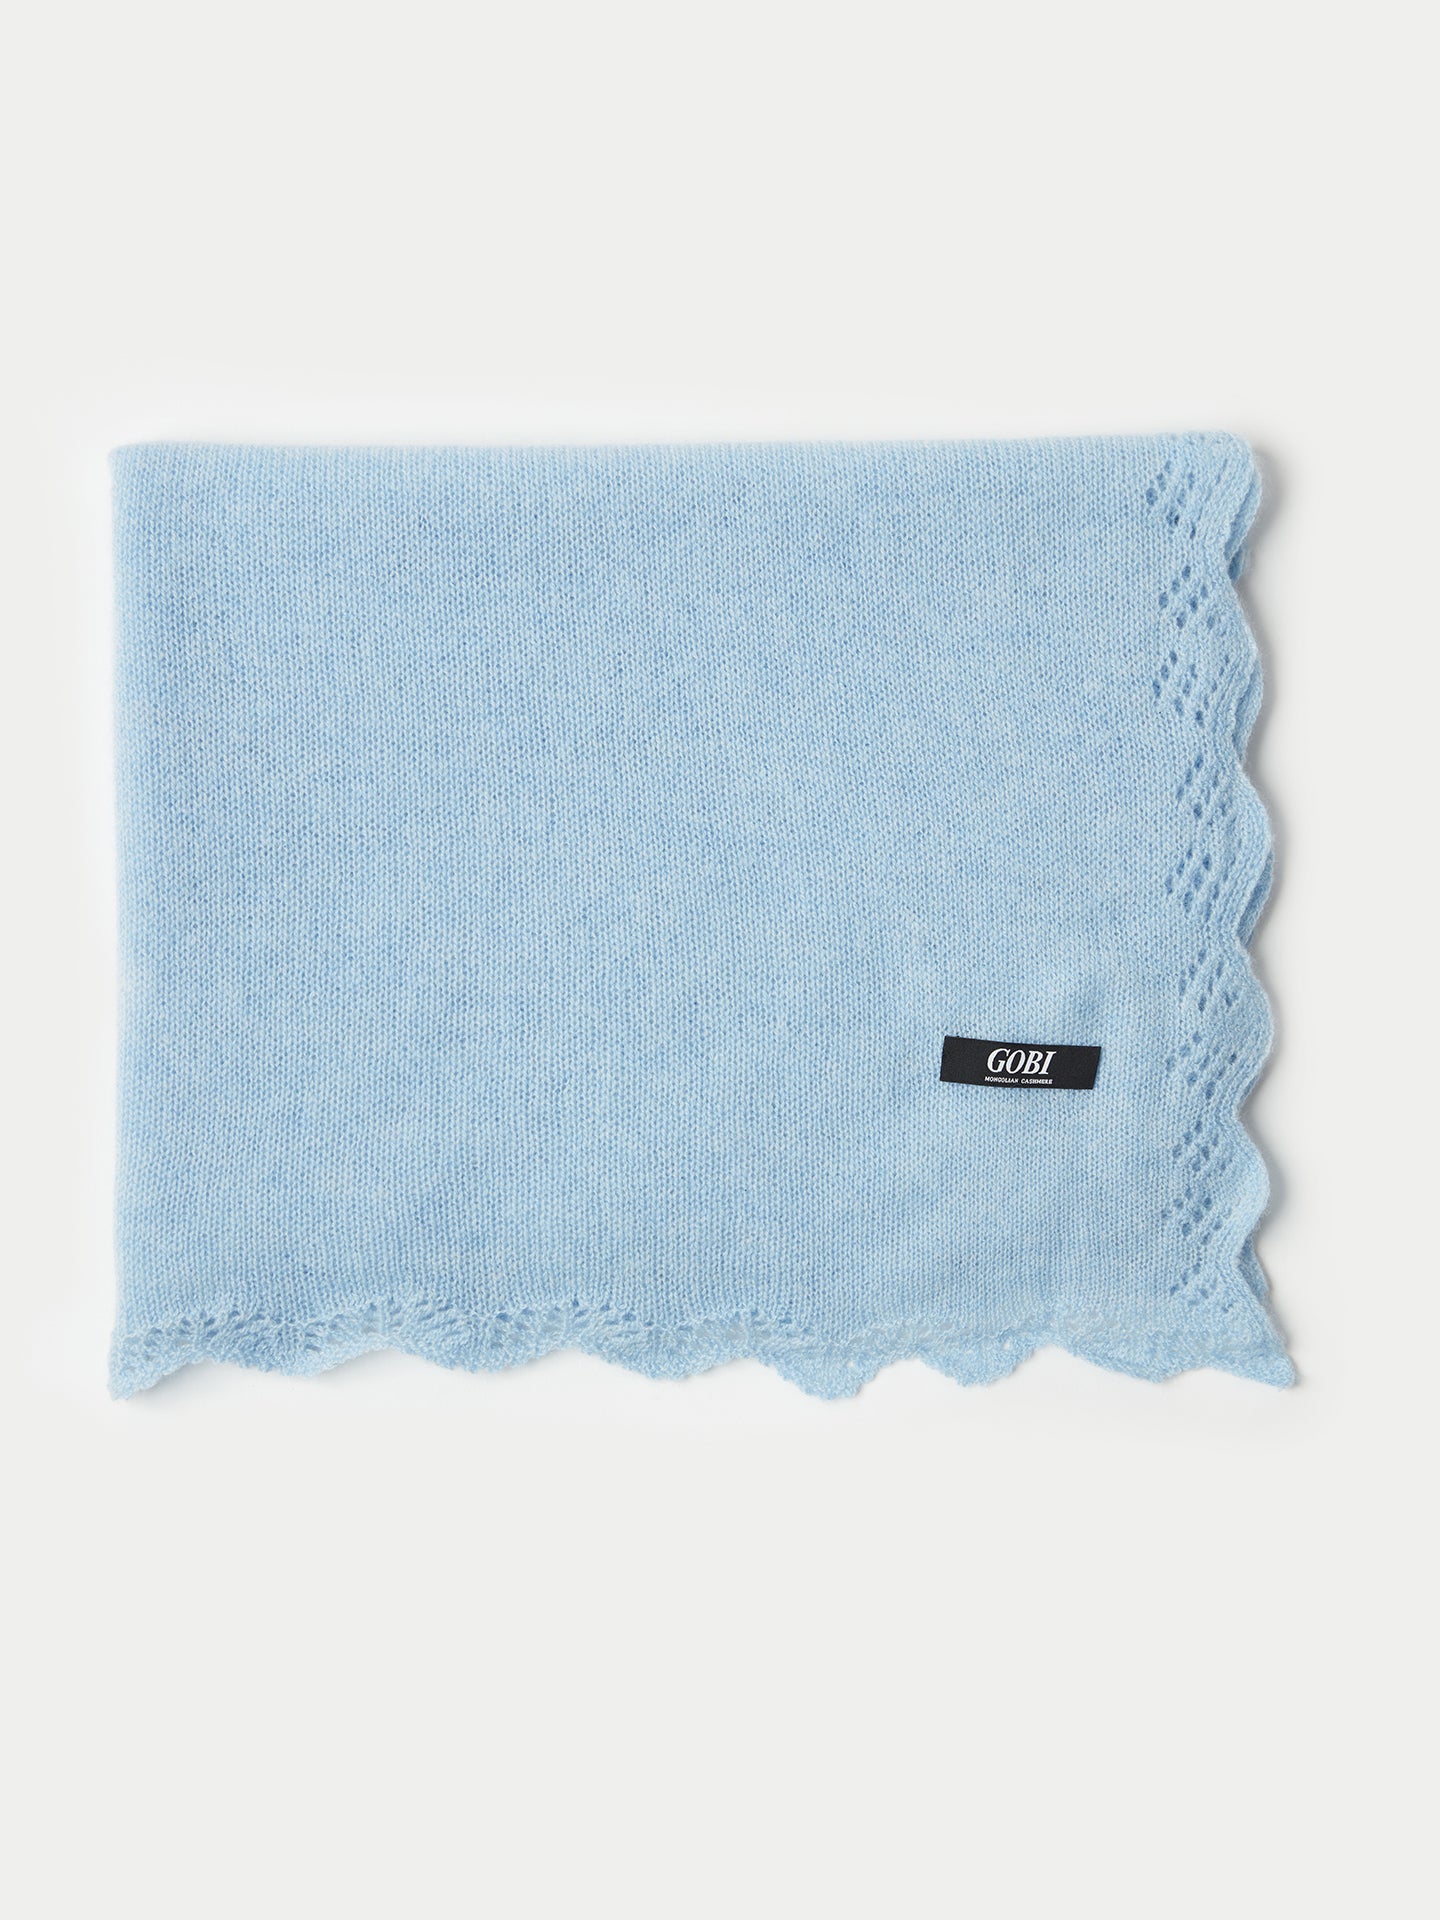 Baby Cashmere blanket Light Blue - Gobi Cashmere